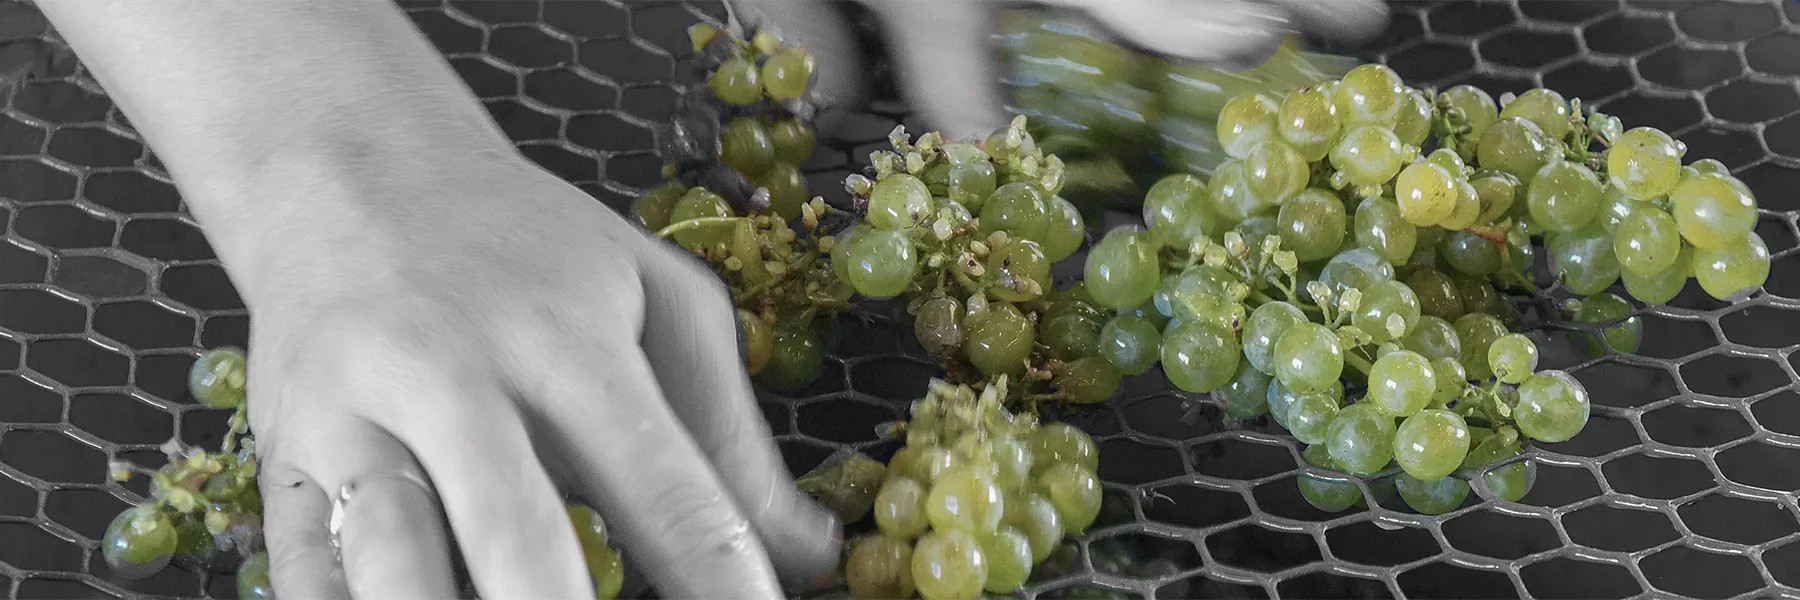 Hand Destemming White Wine Grapes